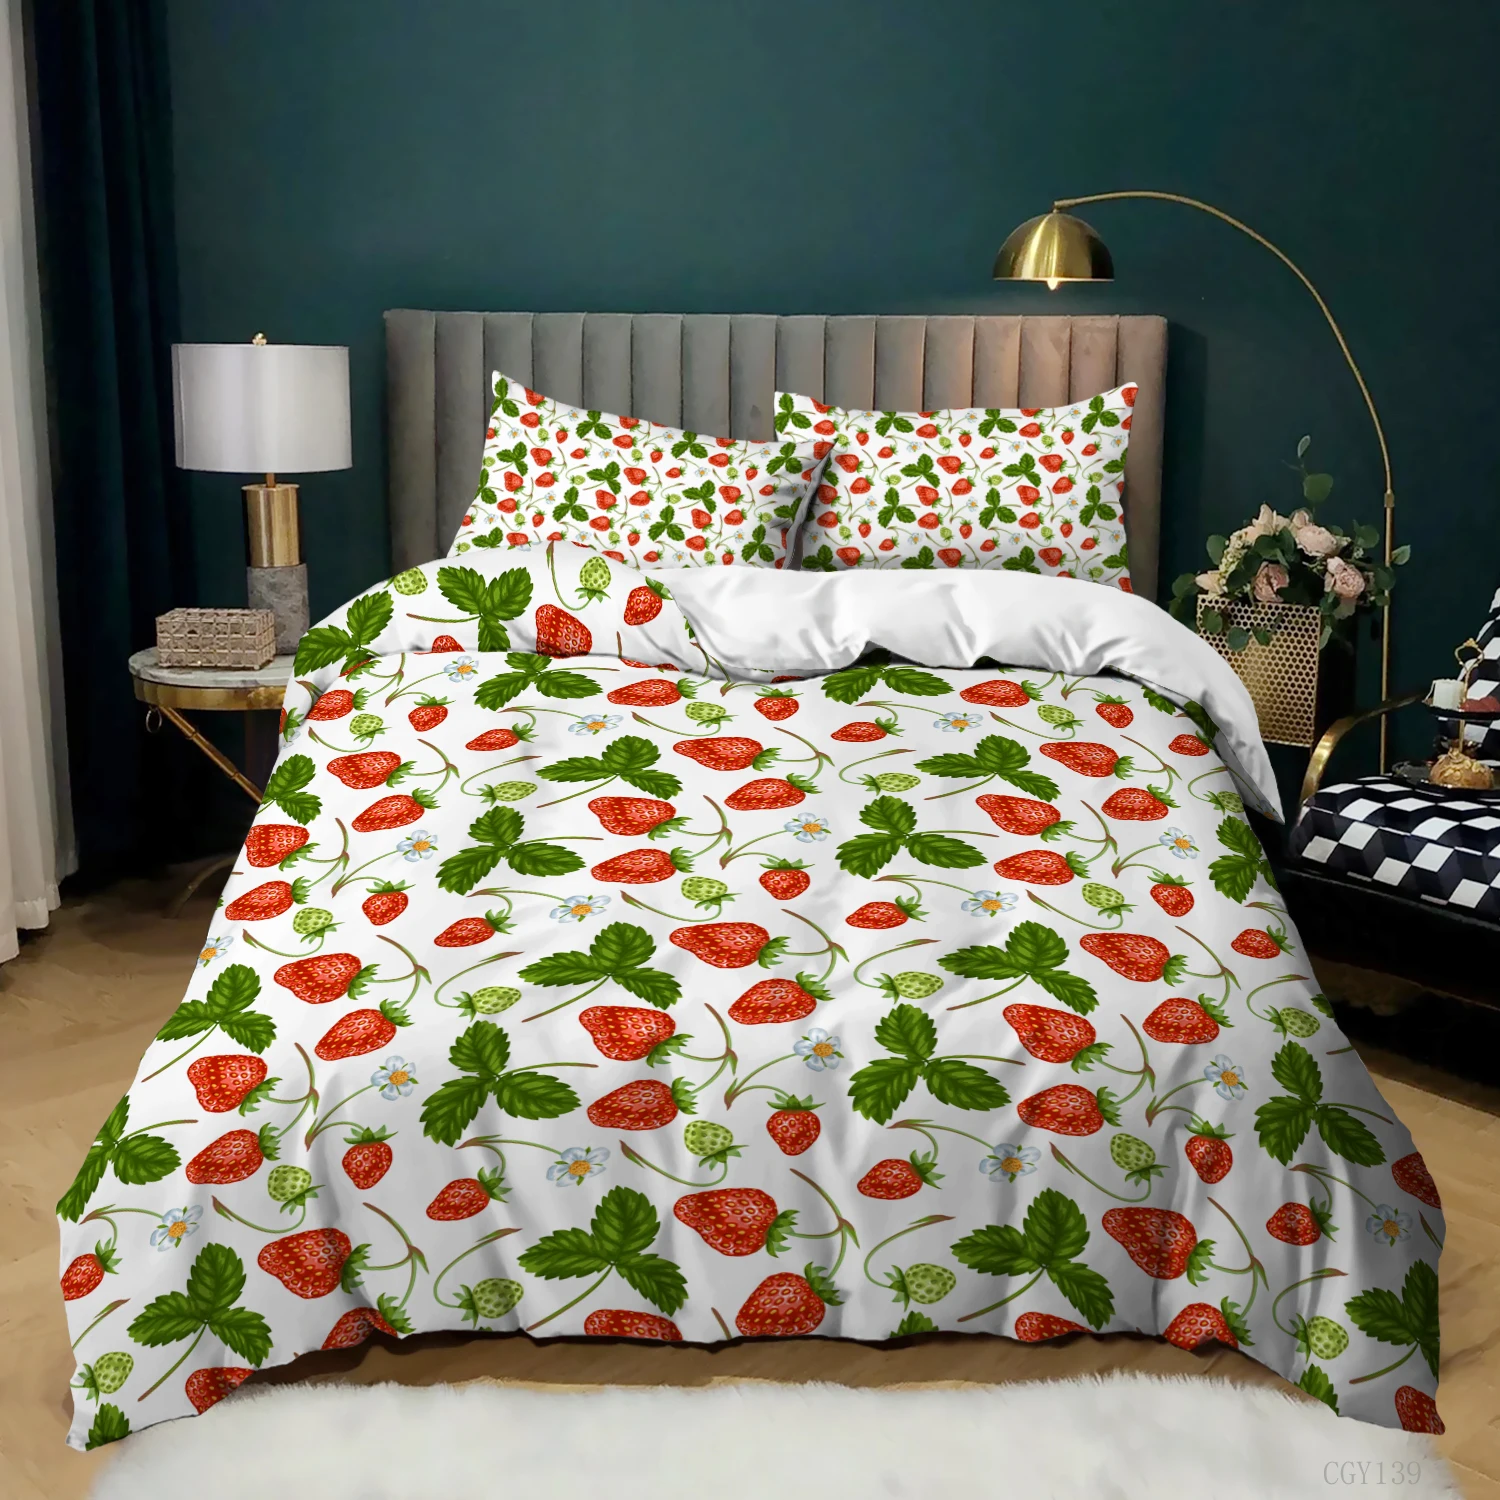 

2/3PCS 3d Printing Fruit Bedding Set Lemon Strawberry Duvet Cover Pillowcase Quilt Cover Queen King Size Comfortable Bedding